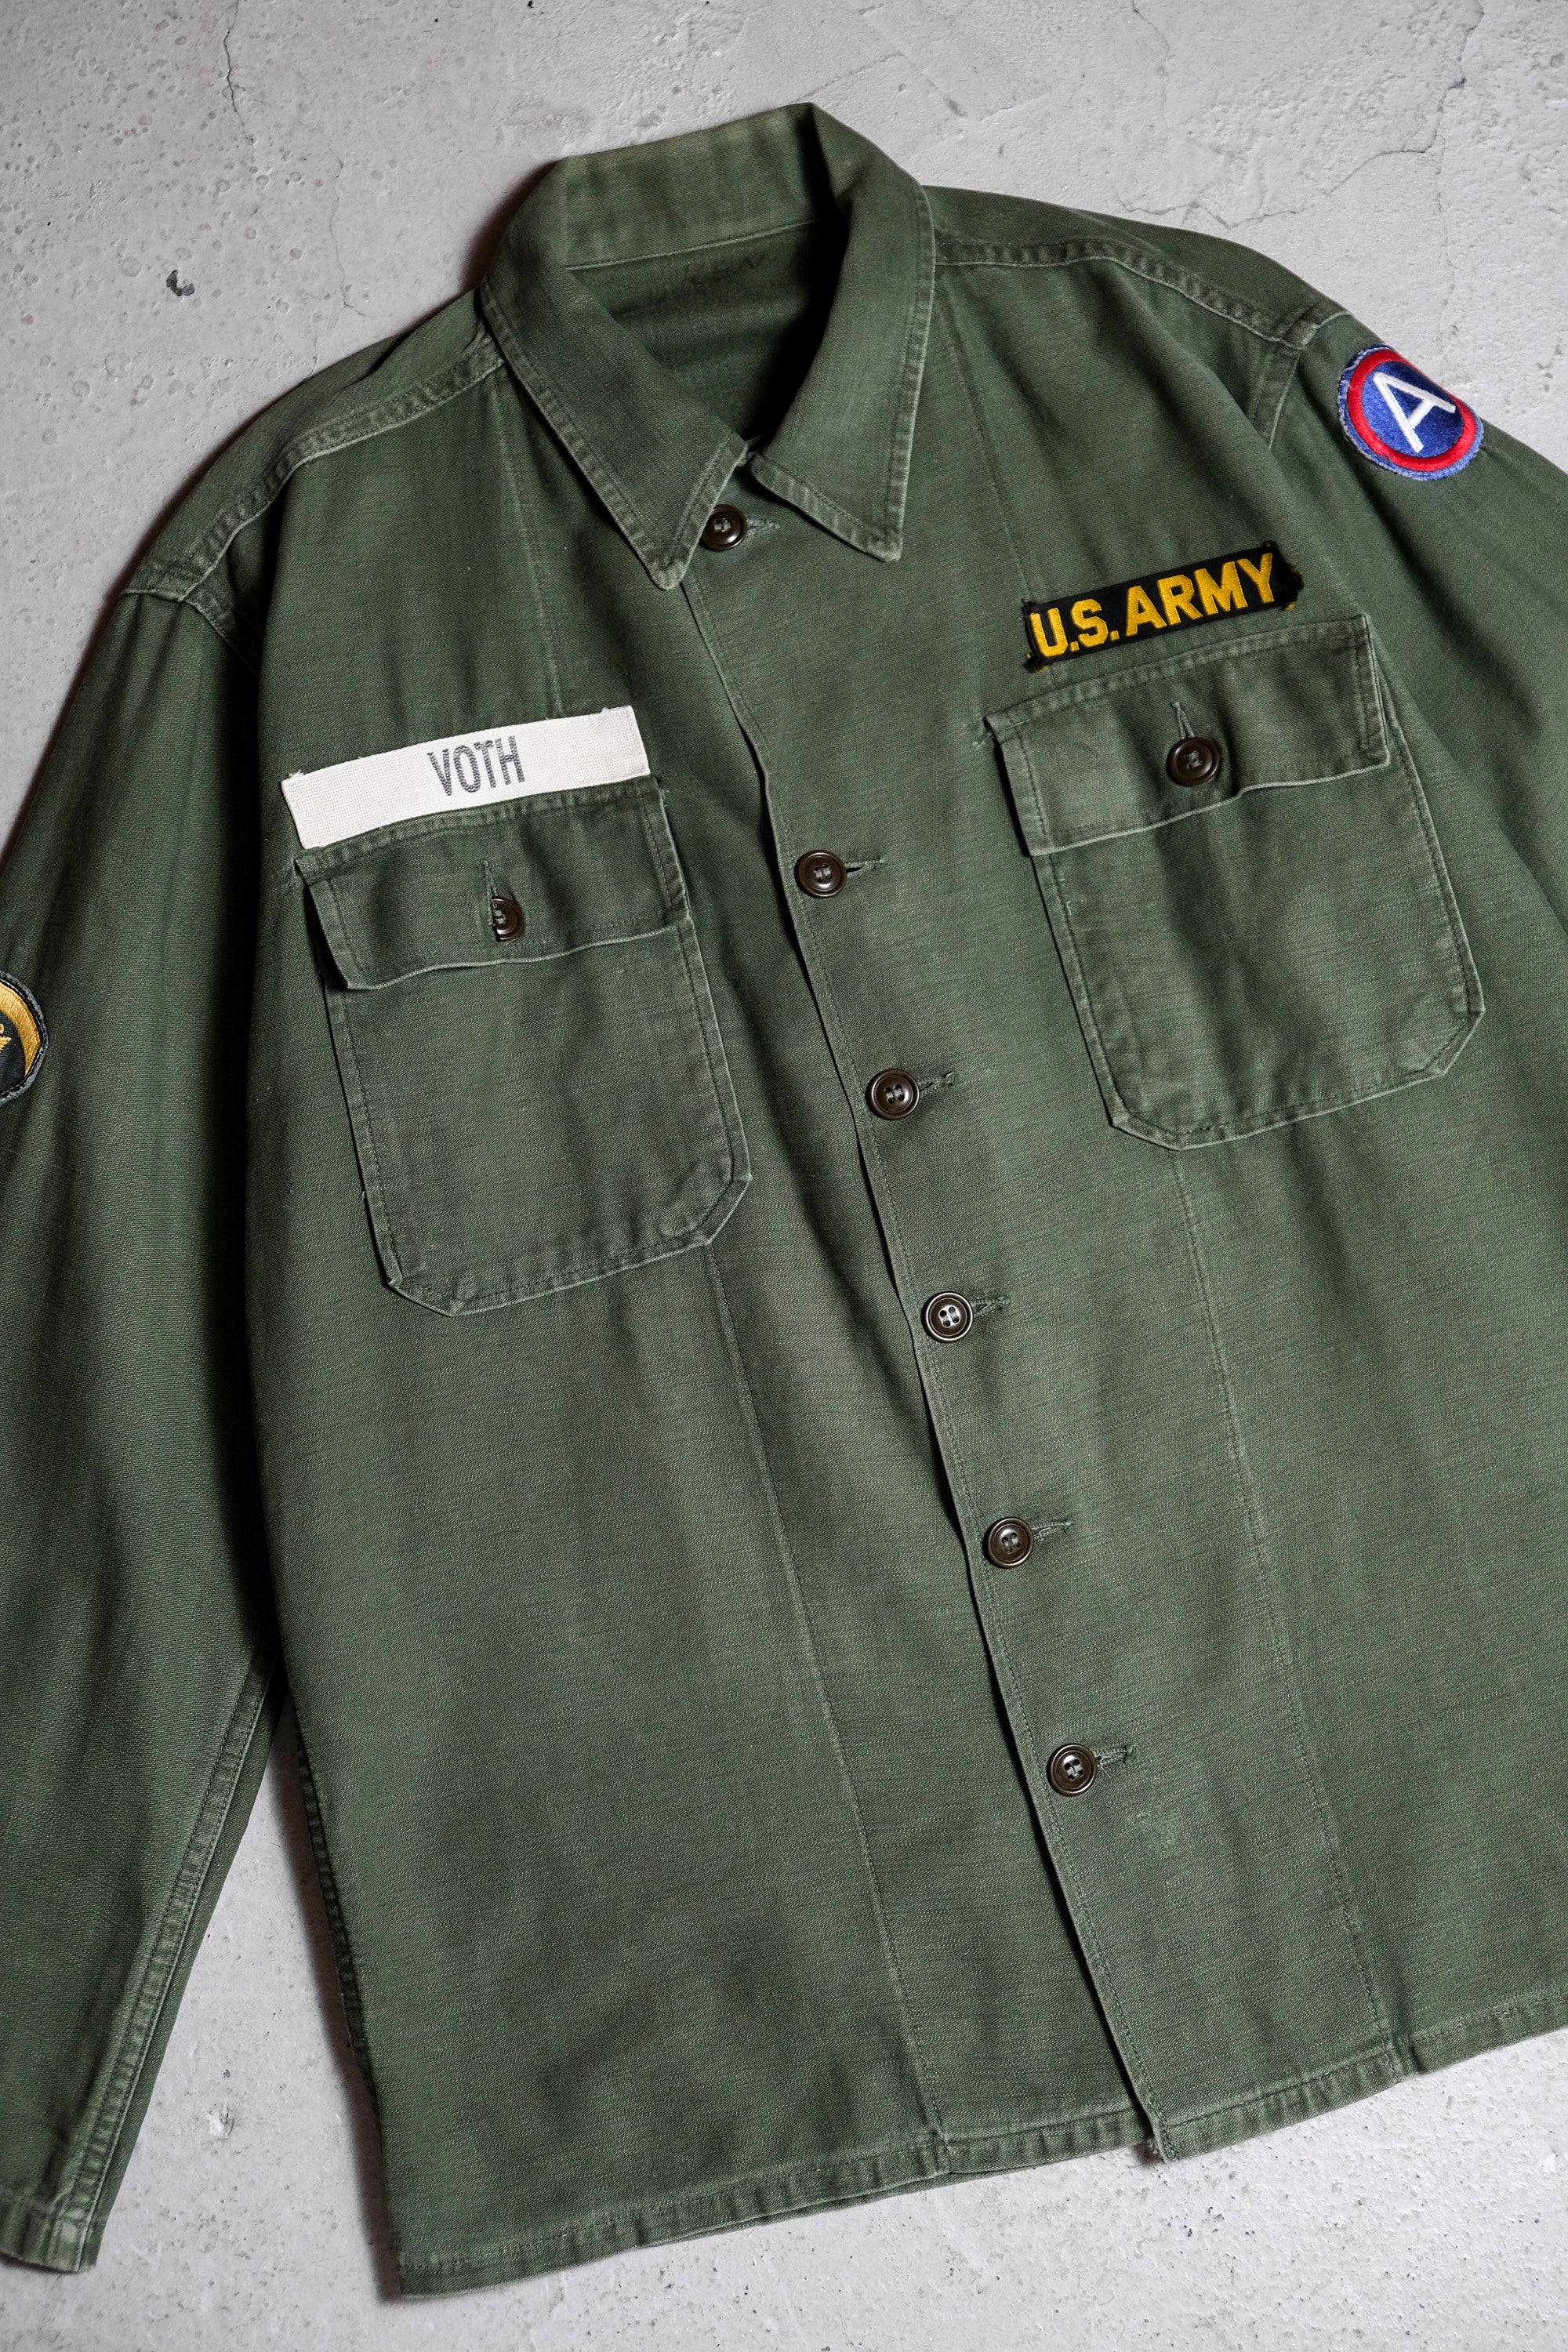 1950's US ARMY OG-107 Fatigue Shirt 50's US Army public service shirt